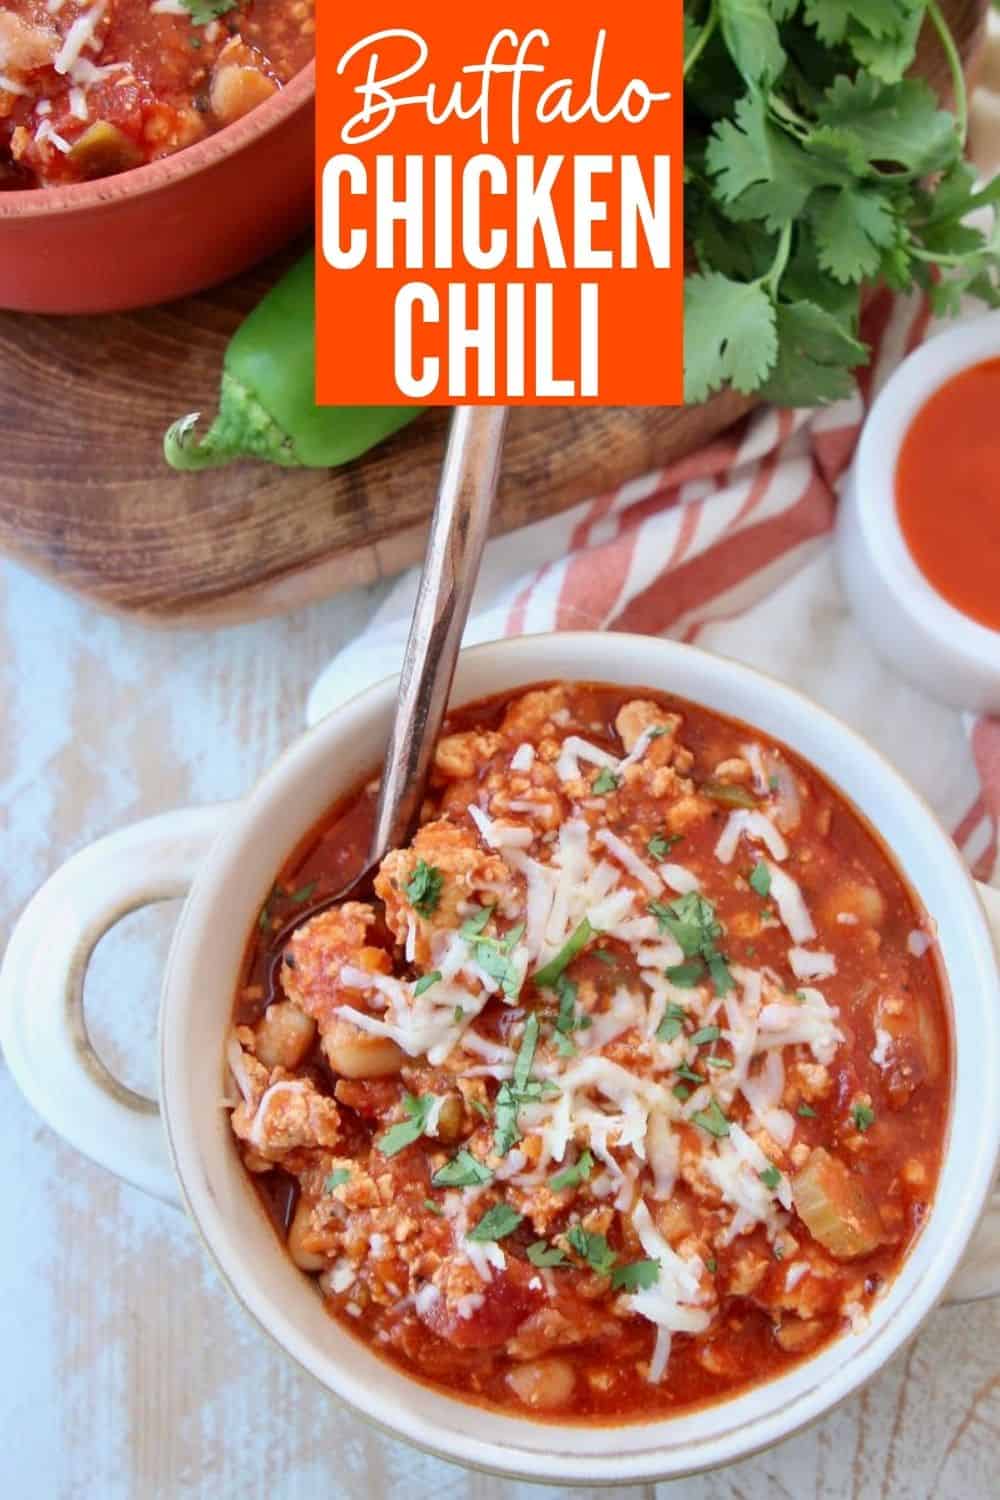 Buffalo Chicken Chili - Slow Cooker Recipe | WhitneyBond.com